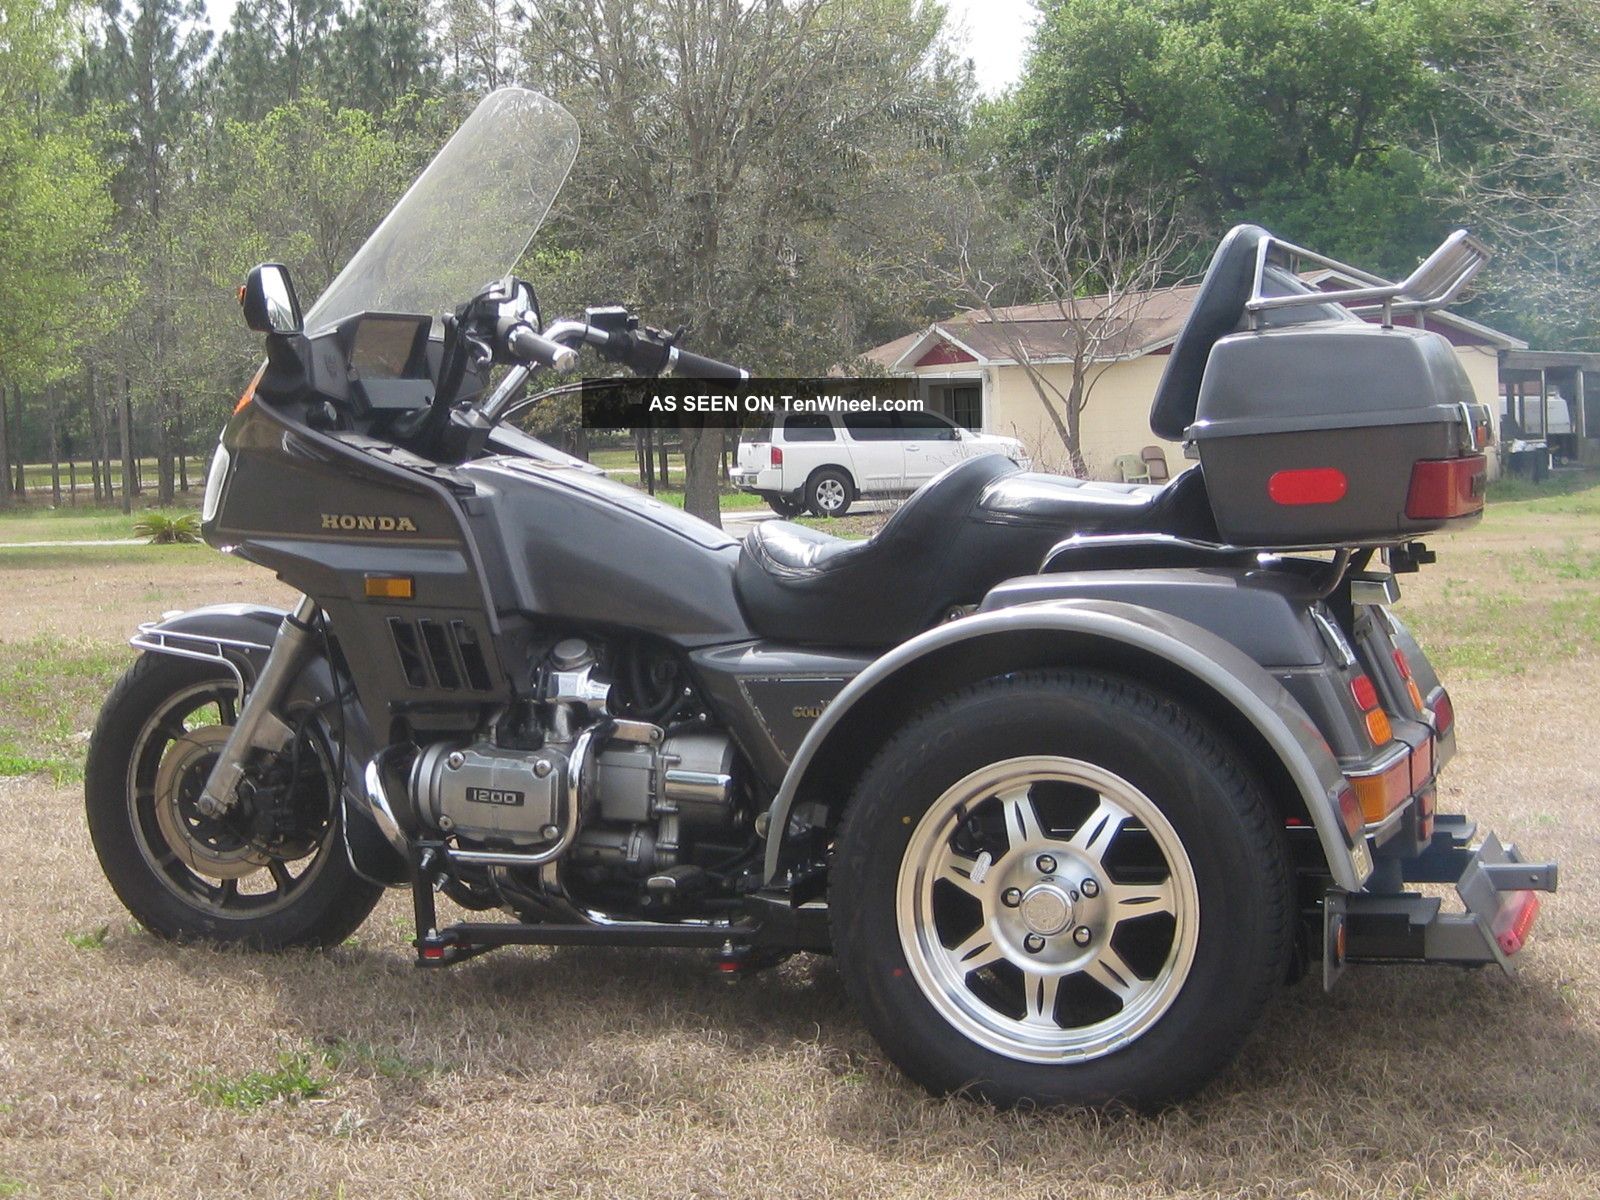 Honda trike kits for motorcycles